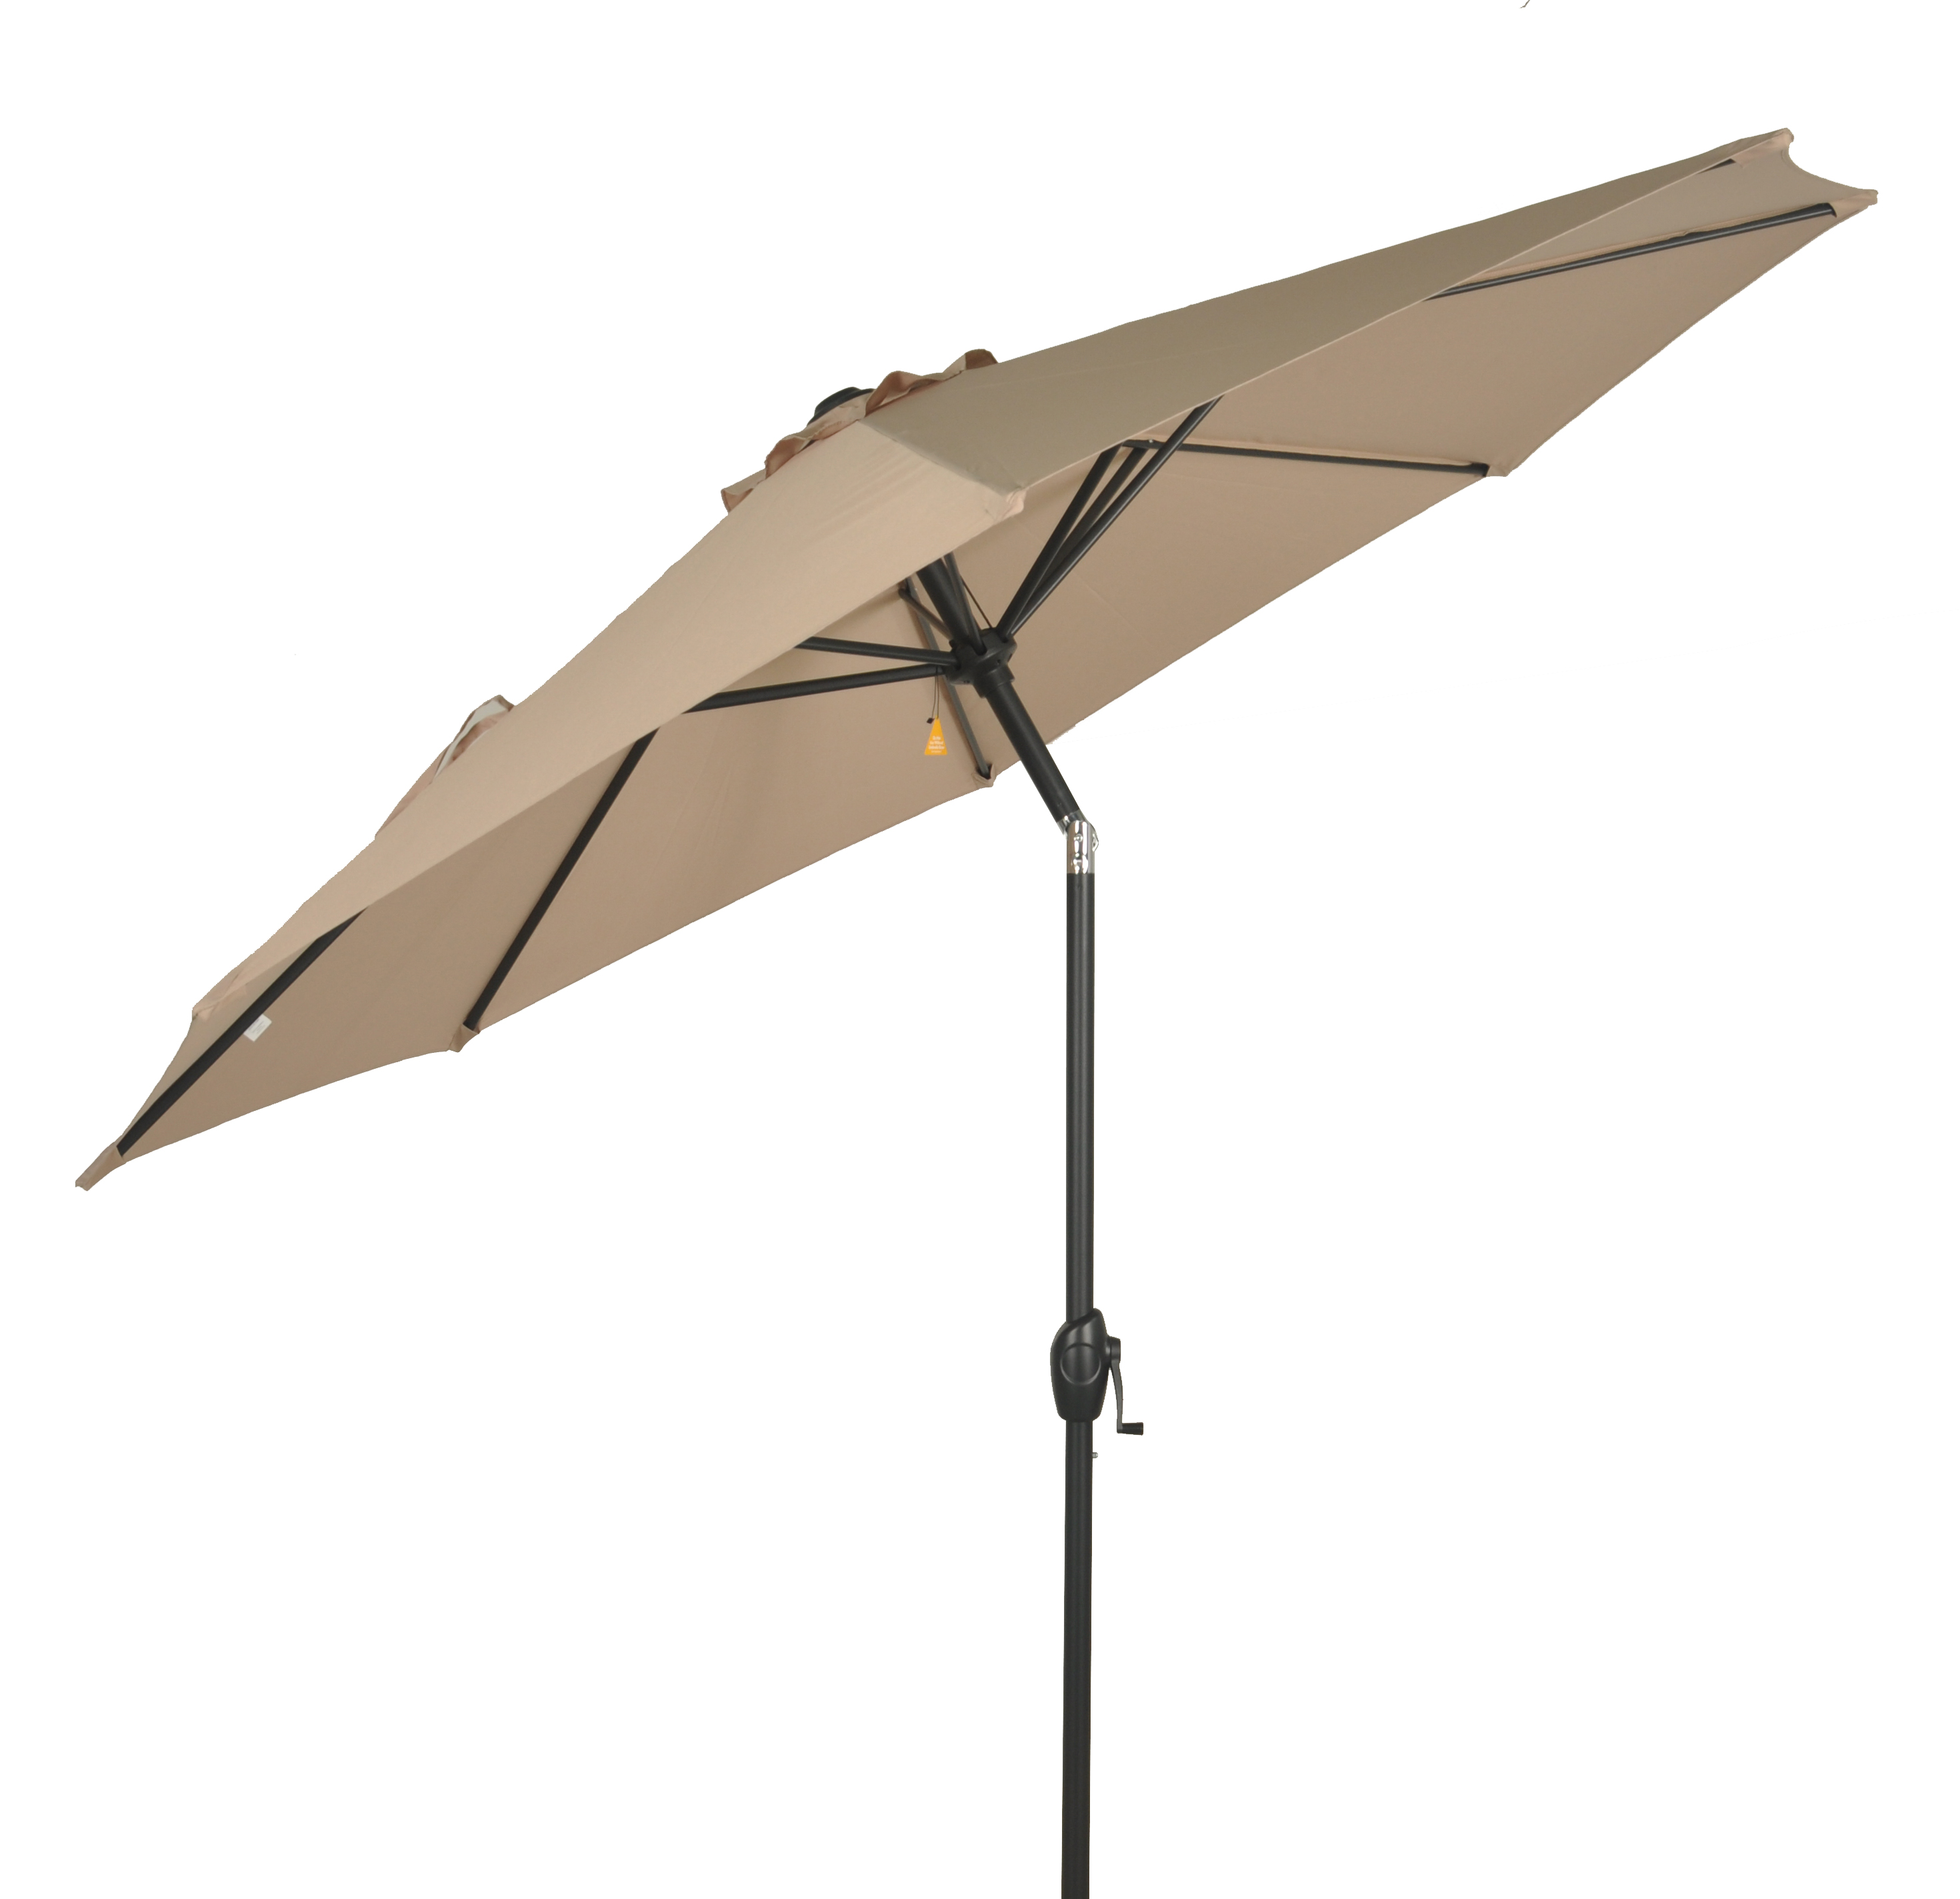 Mainstays 9' Outdoor Tilt Market Patio Umbrella - Tan - image 1 of 10